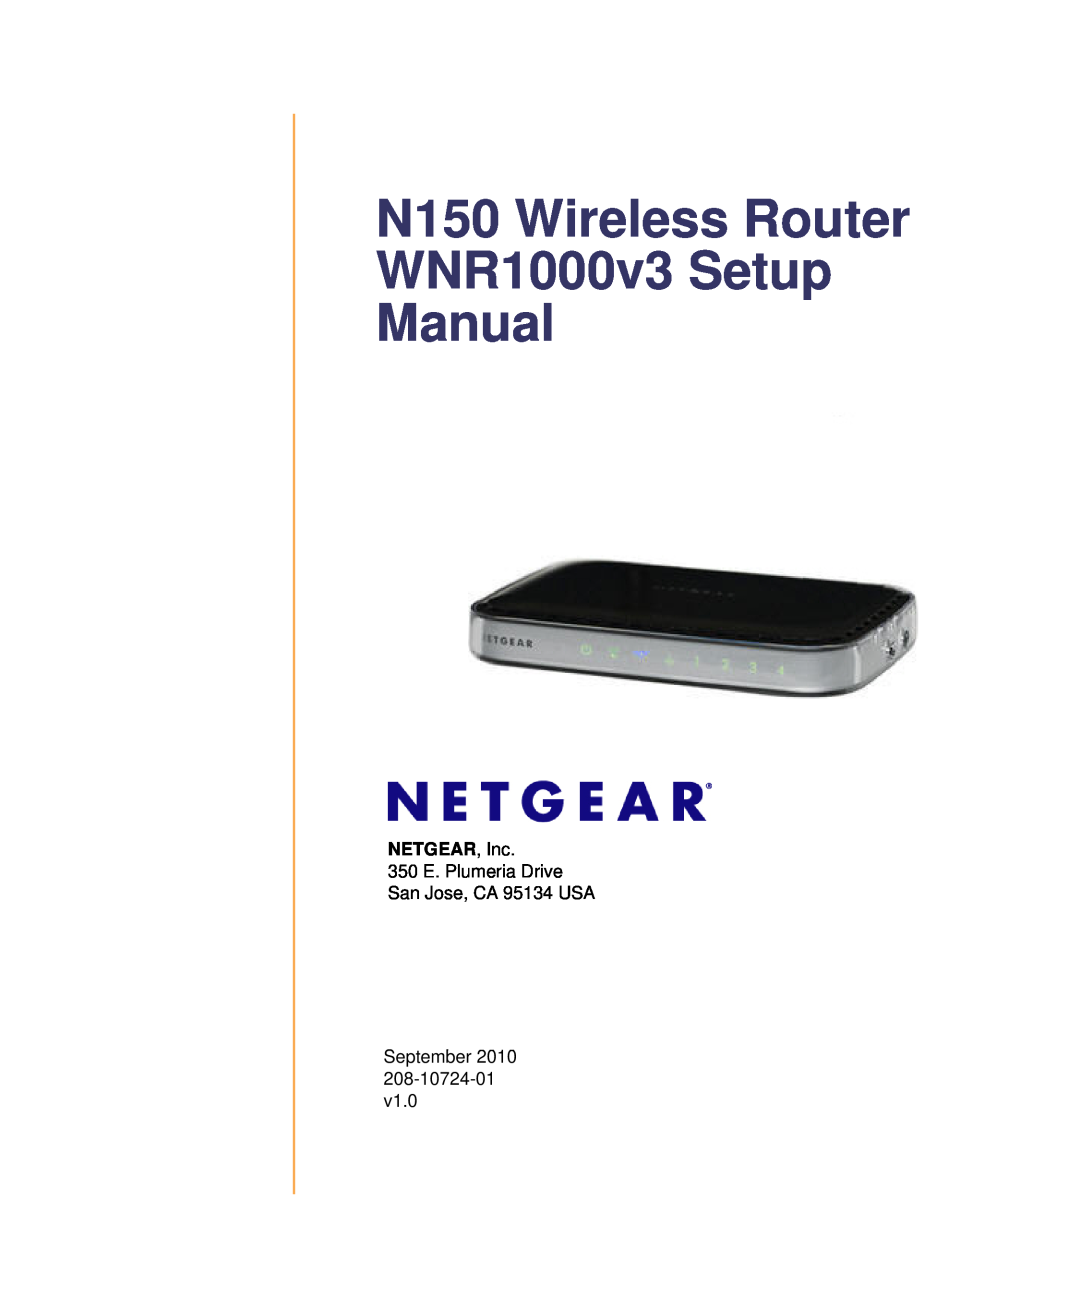 NETGEAR manual N150 Wireless Router WNR1000v3 Setup Manual, NETGEAR, Inc 